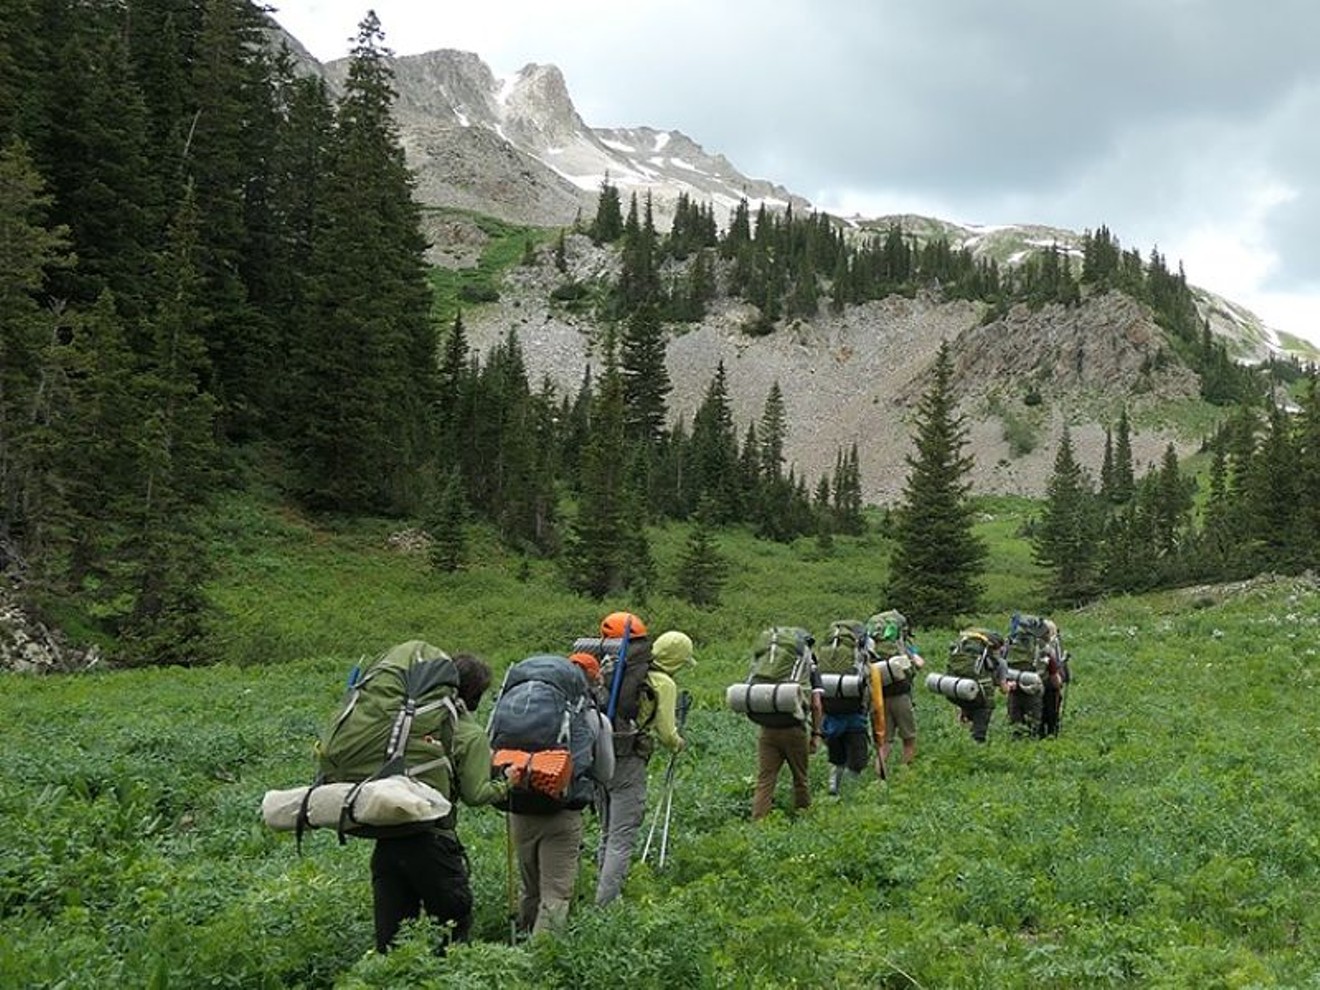 A Colorado Outward Bound trip heading into the wilderness.